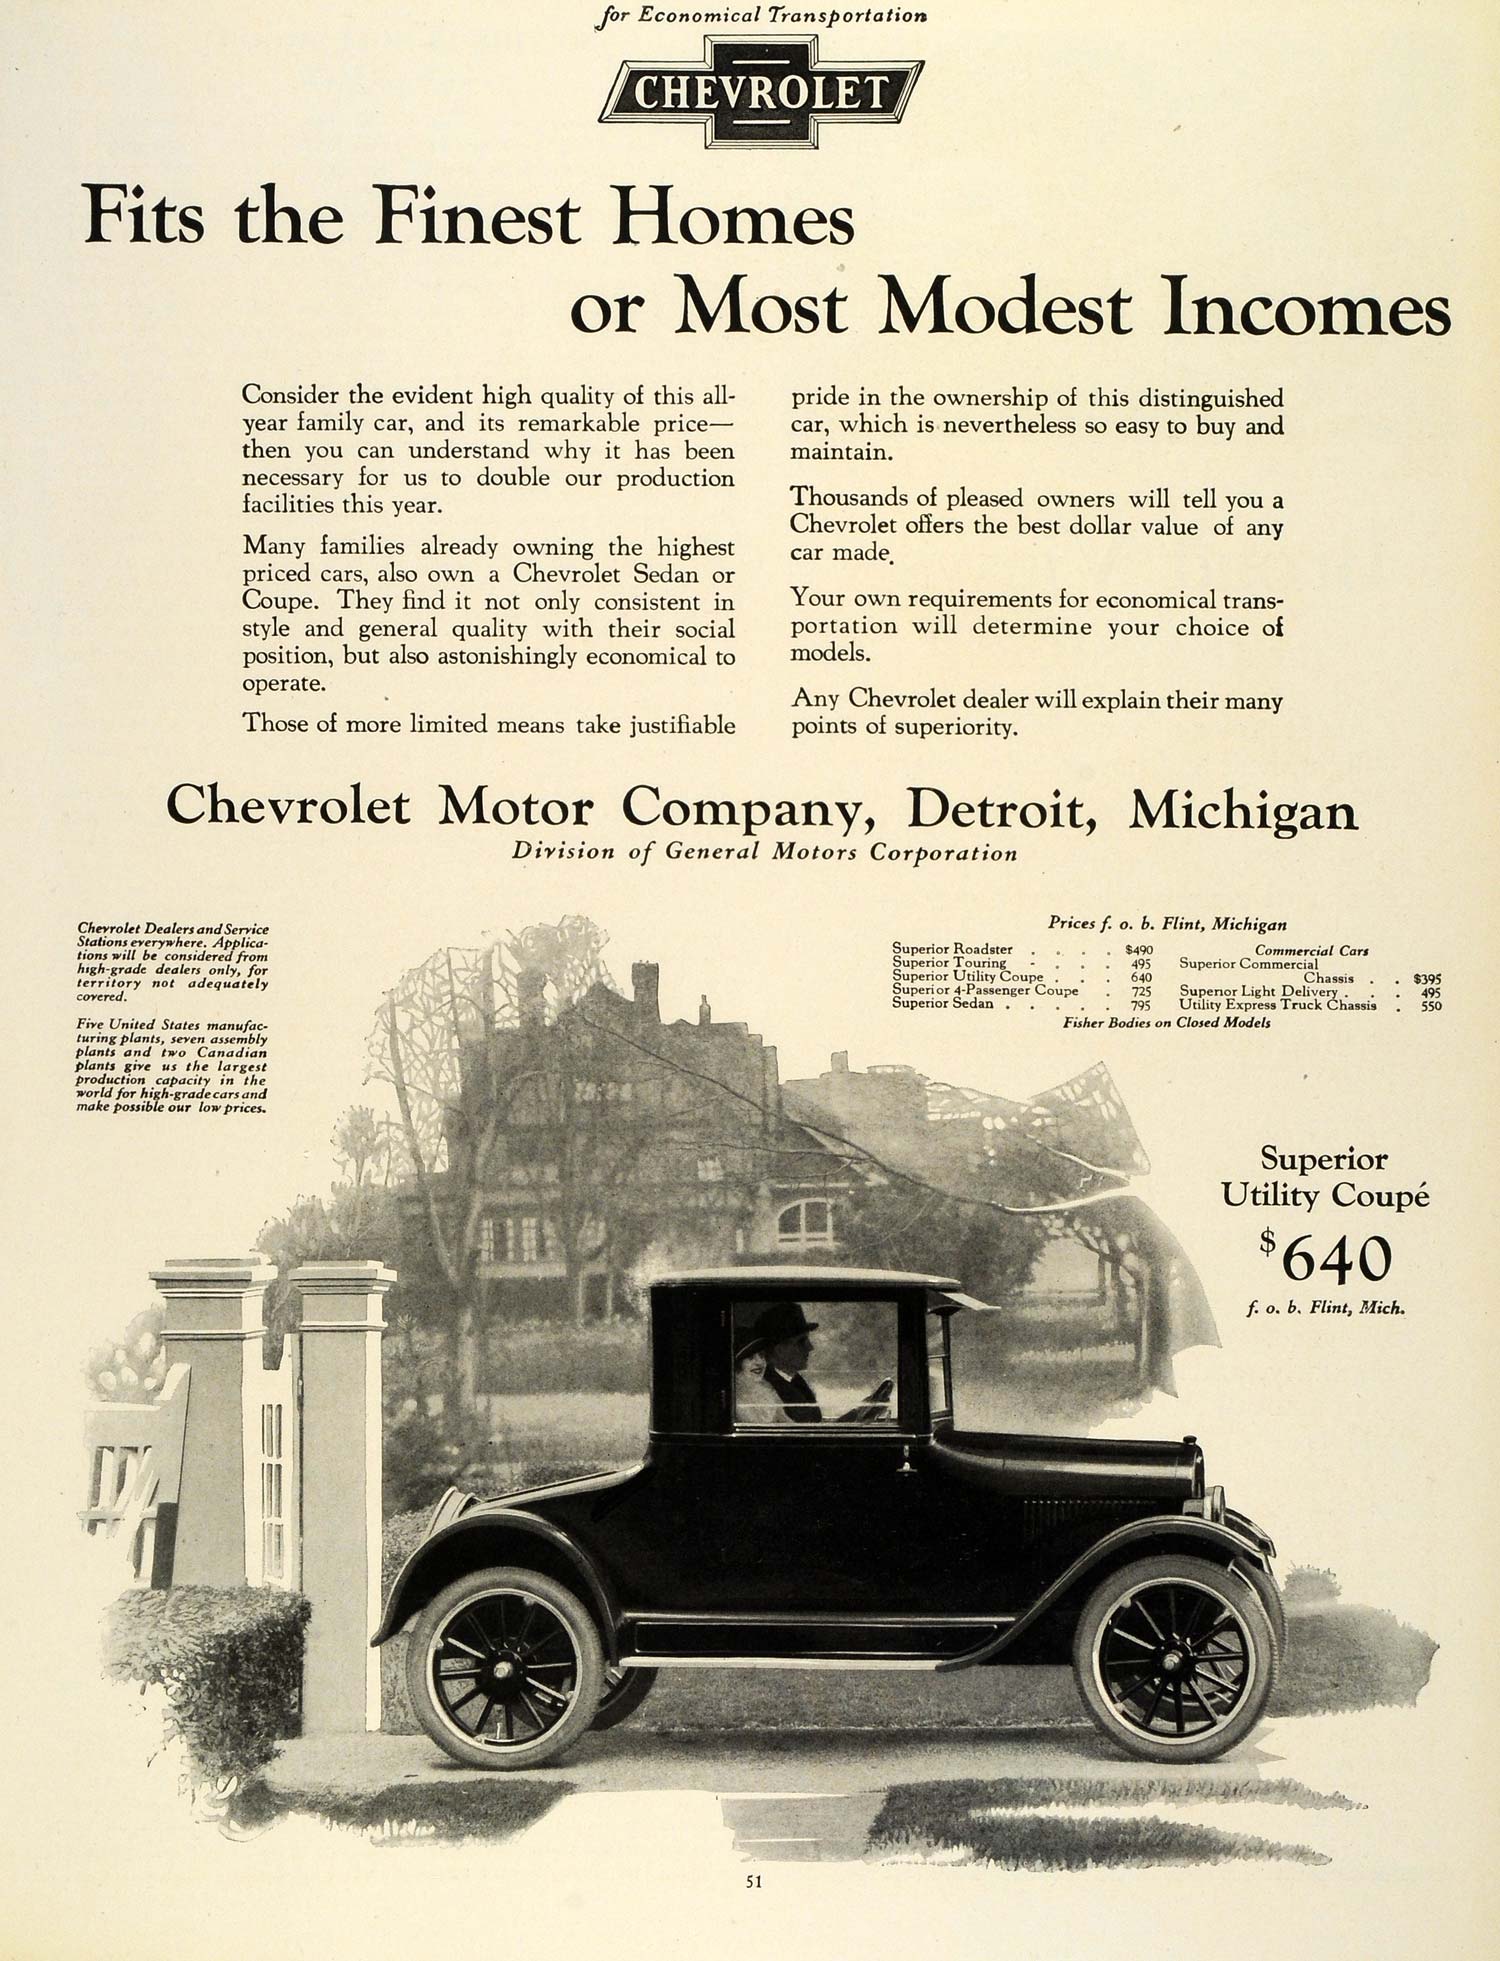 1924 Ad Chevrolet Antique Superior Utility Coupe Automobile General Motors THM